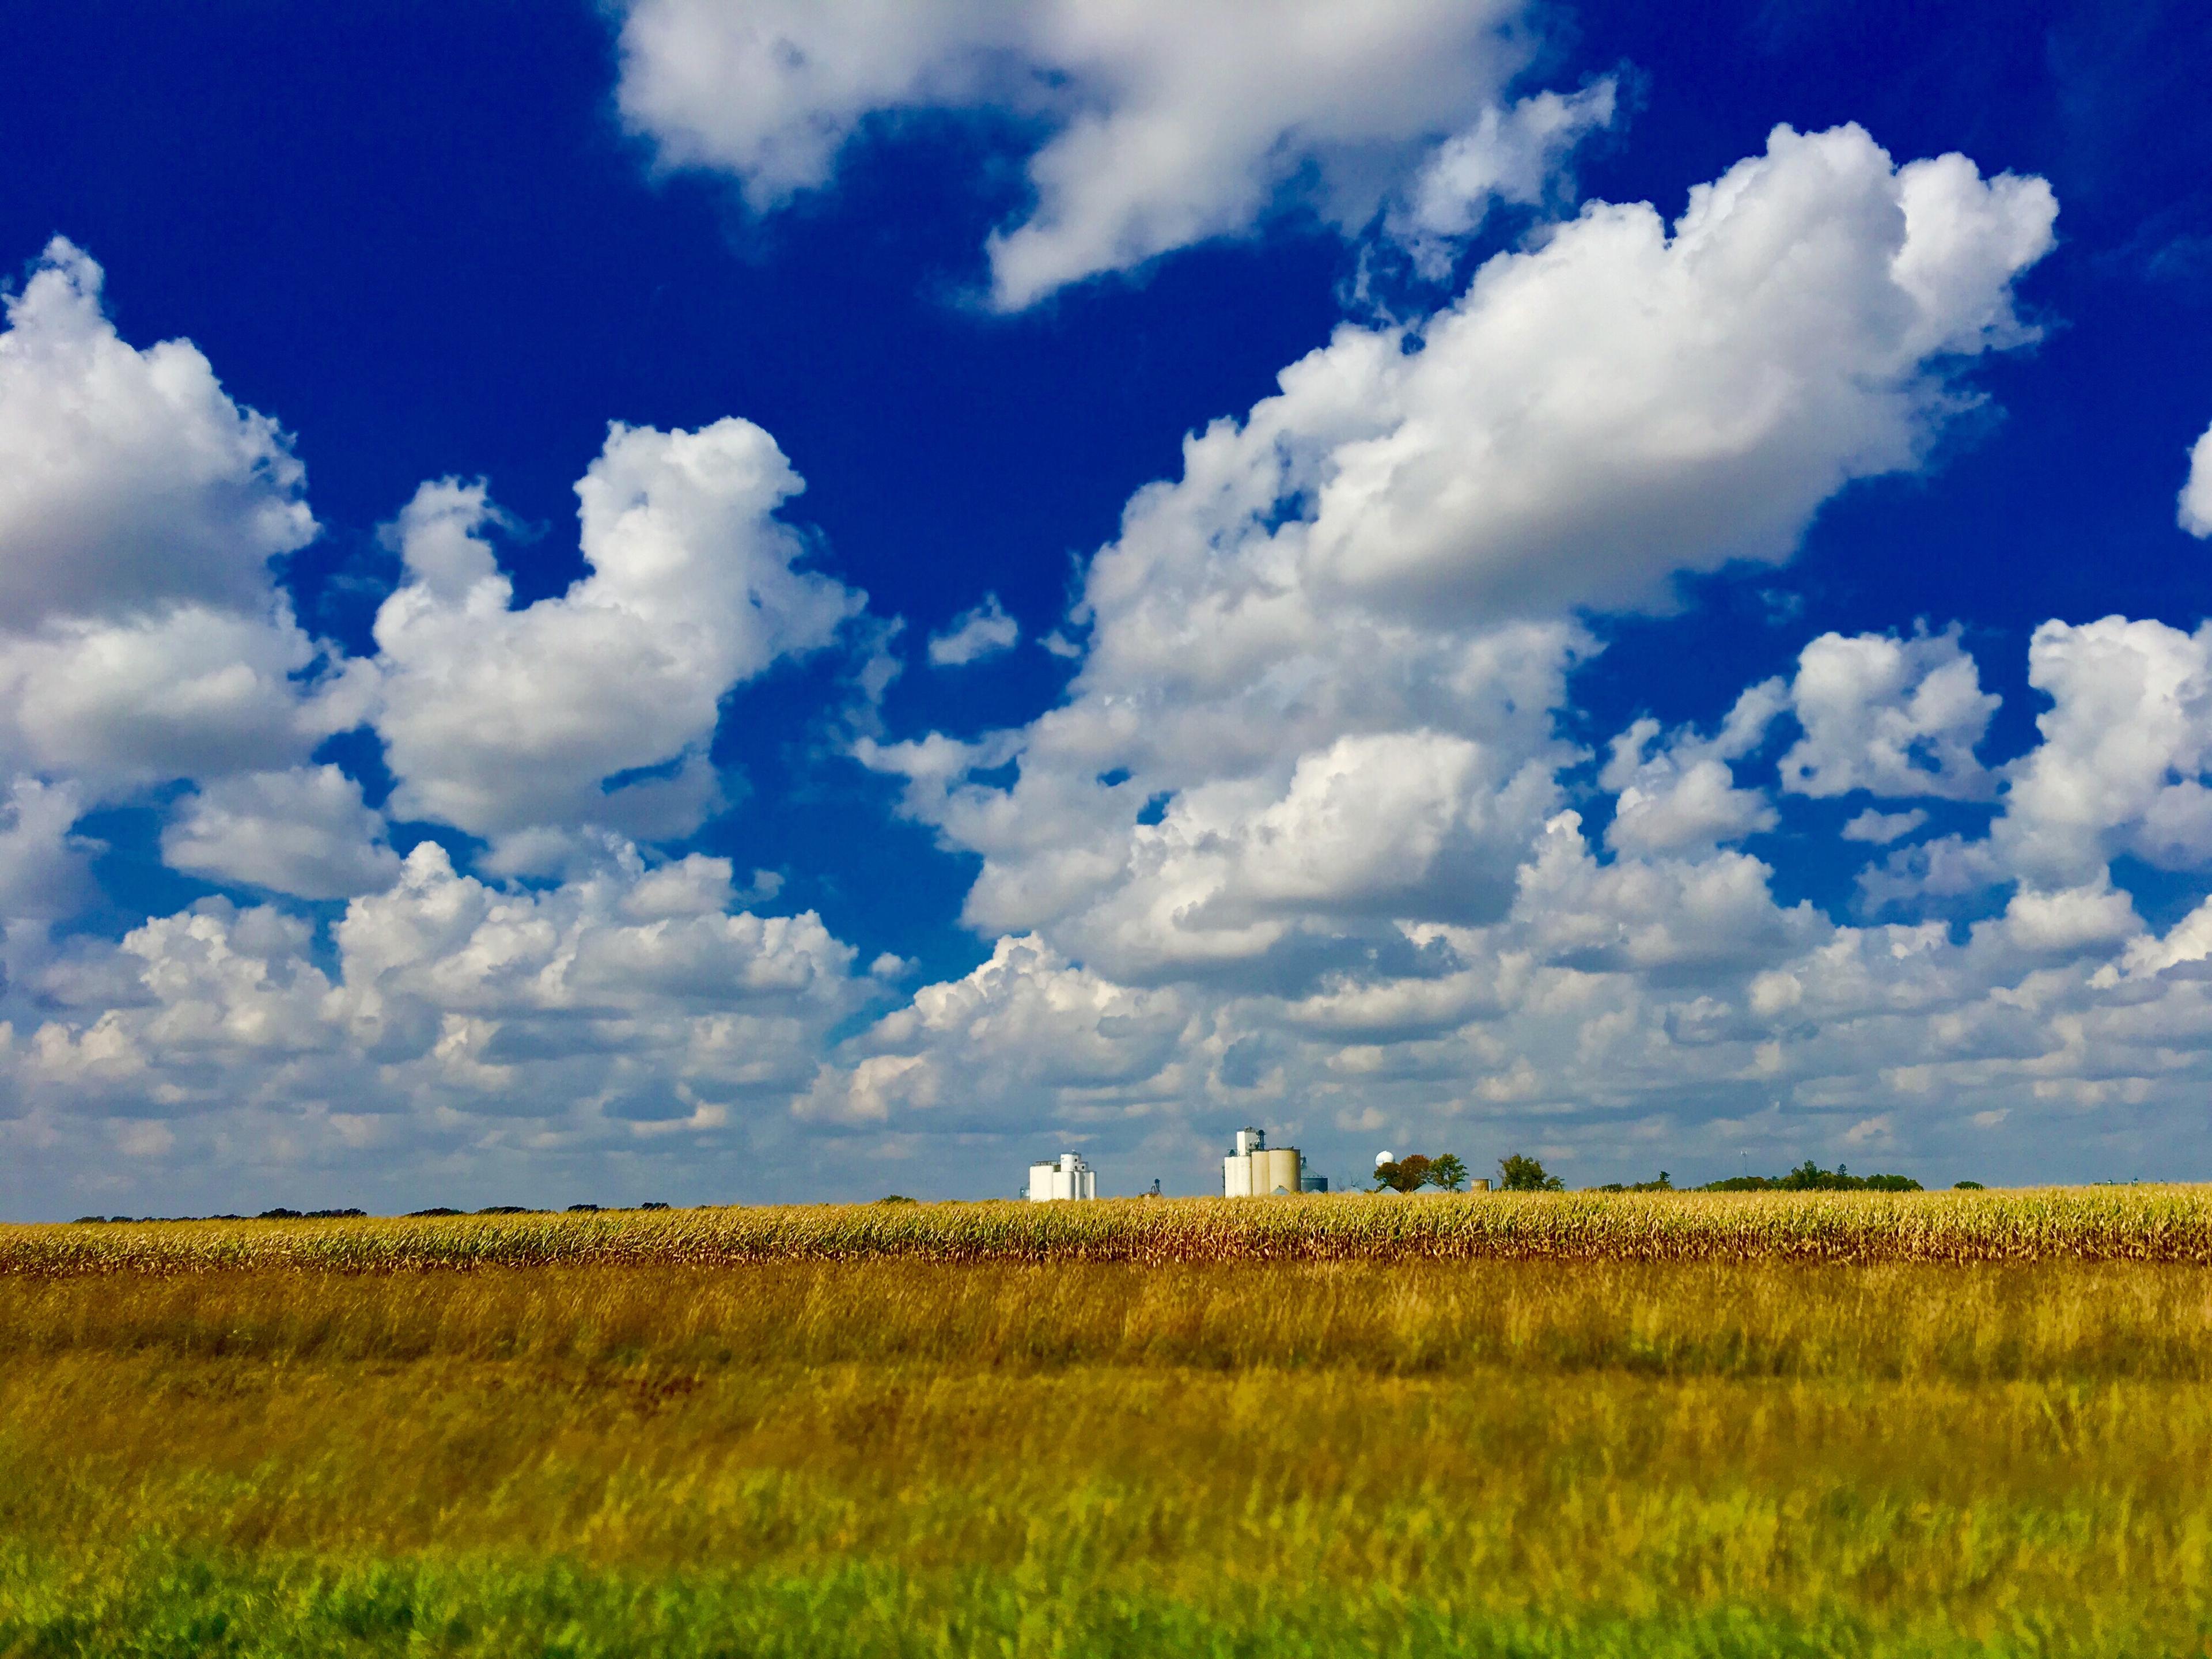 Farmland with blue cloudy skies in Iowa